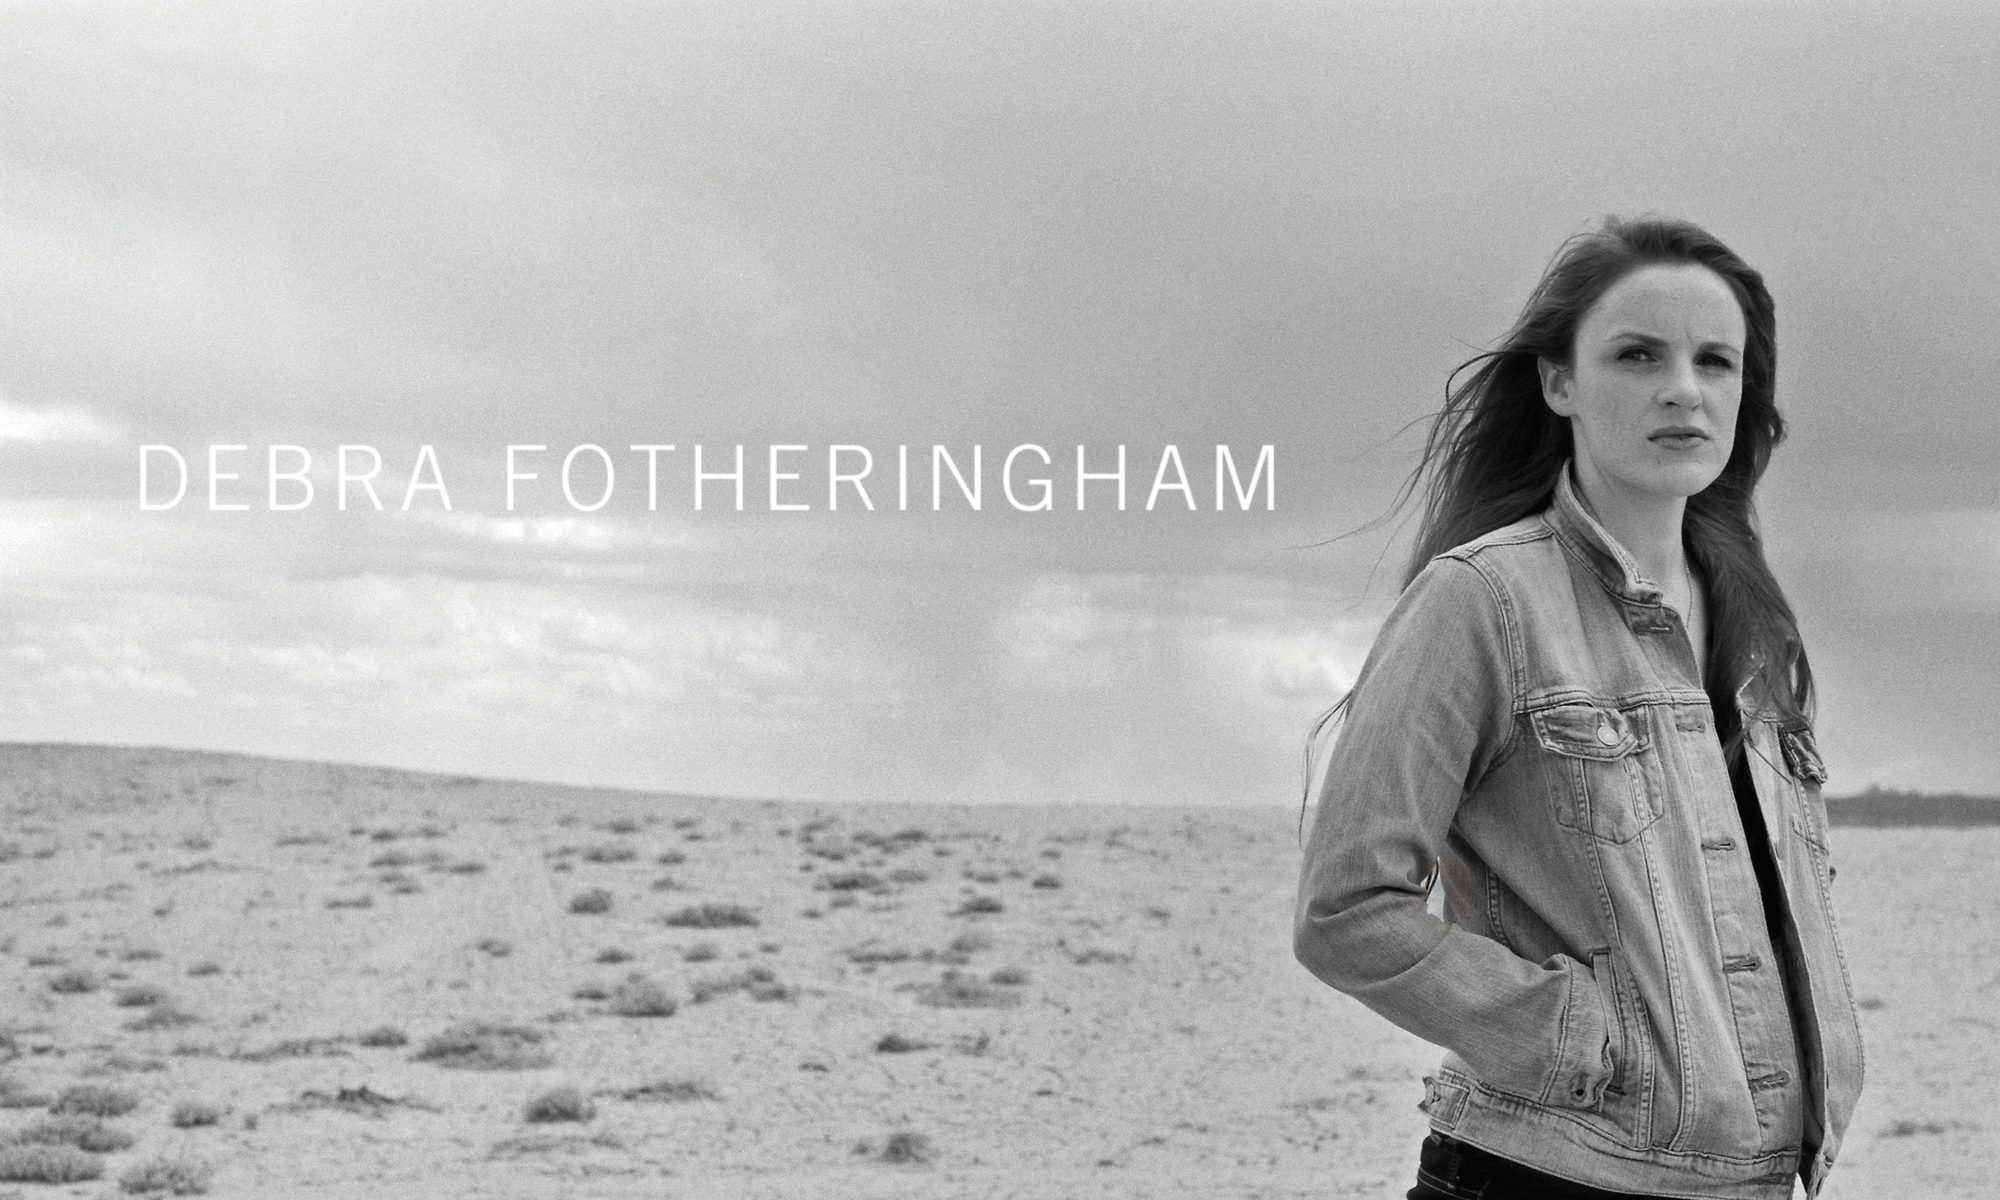 Debra Fotheringham